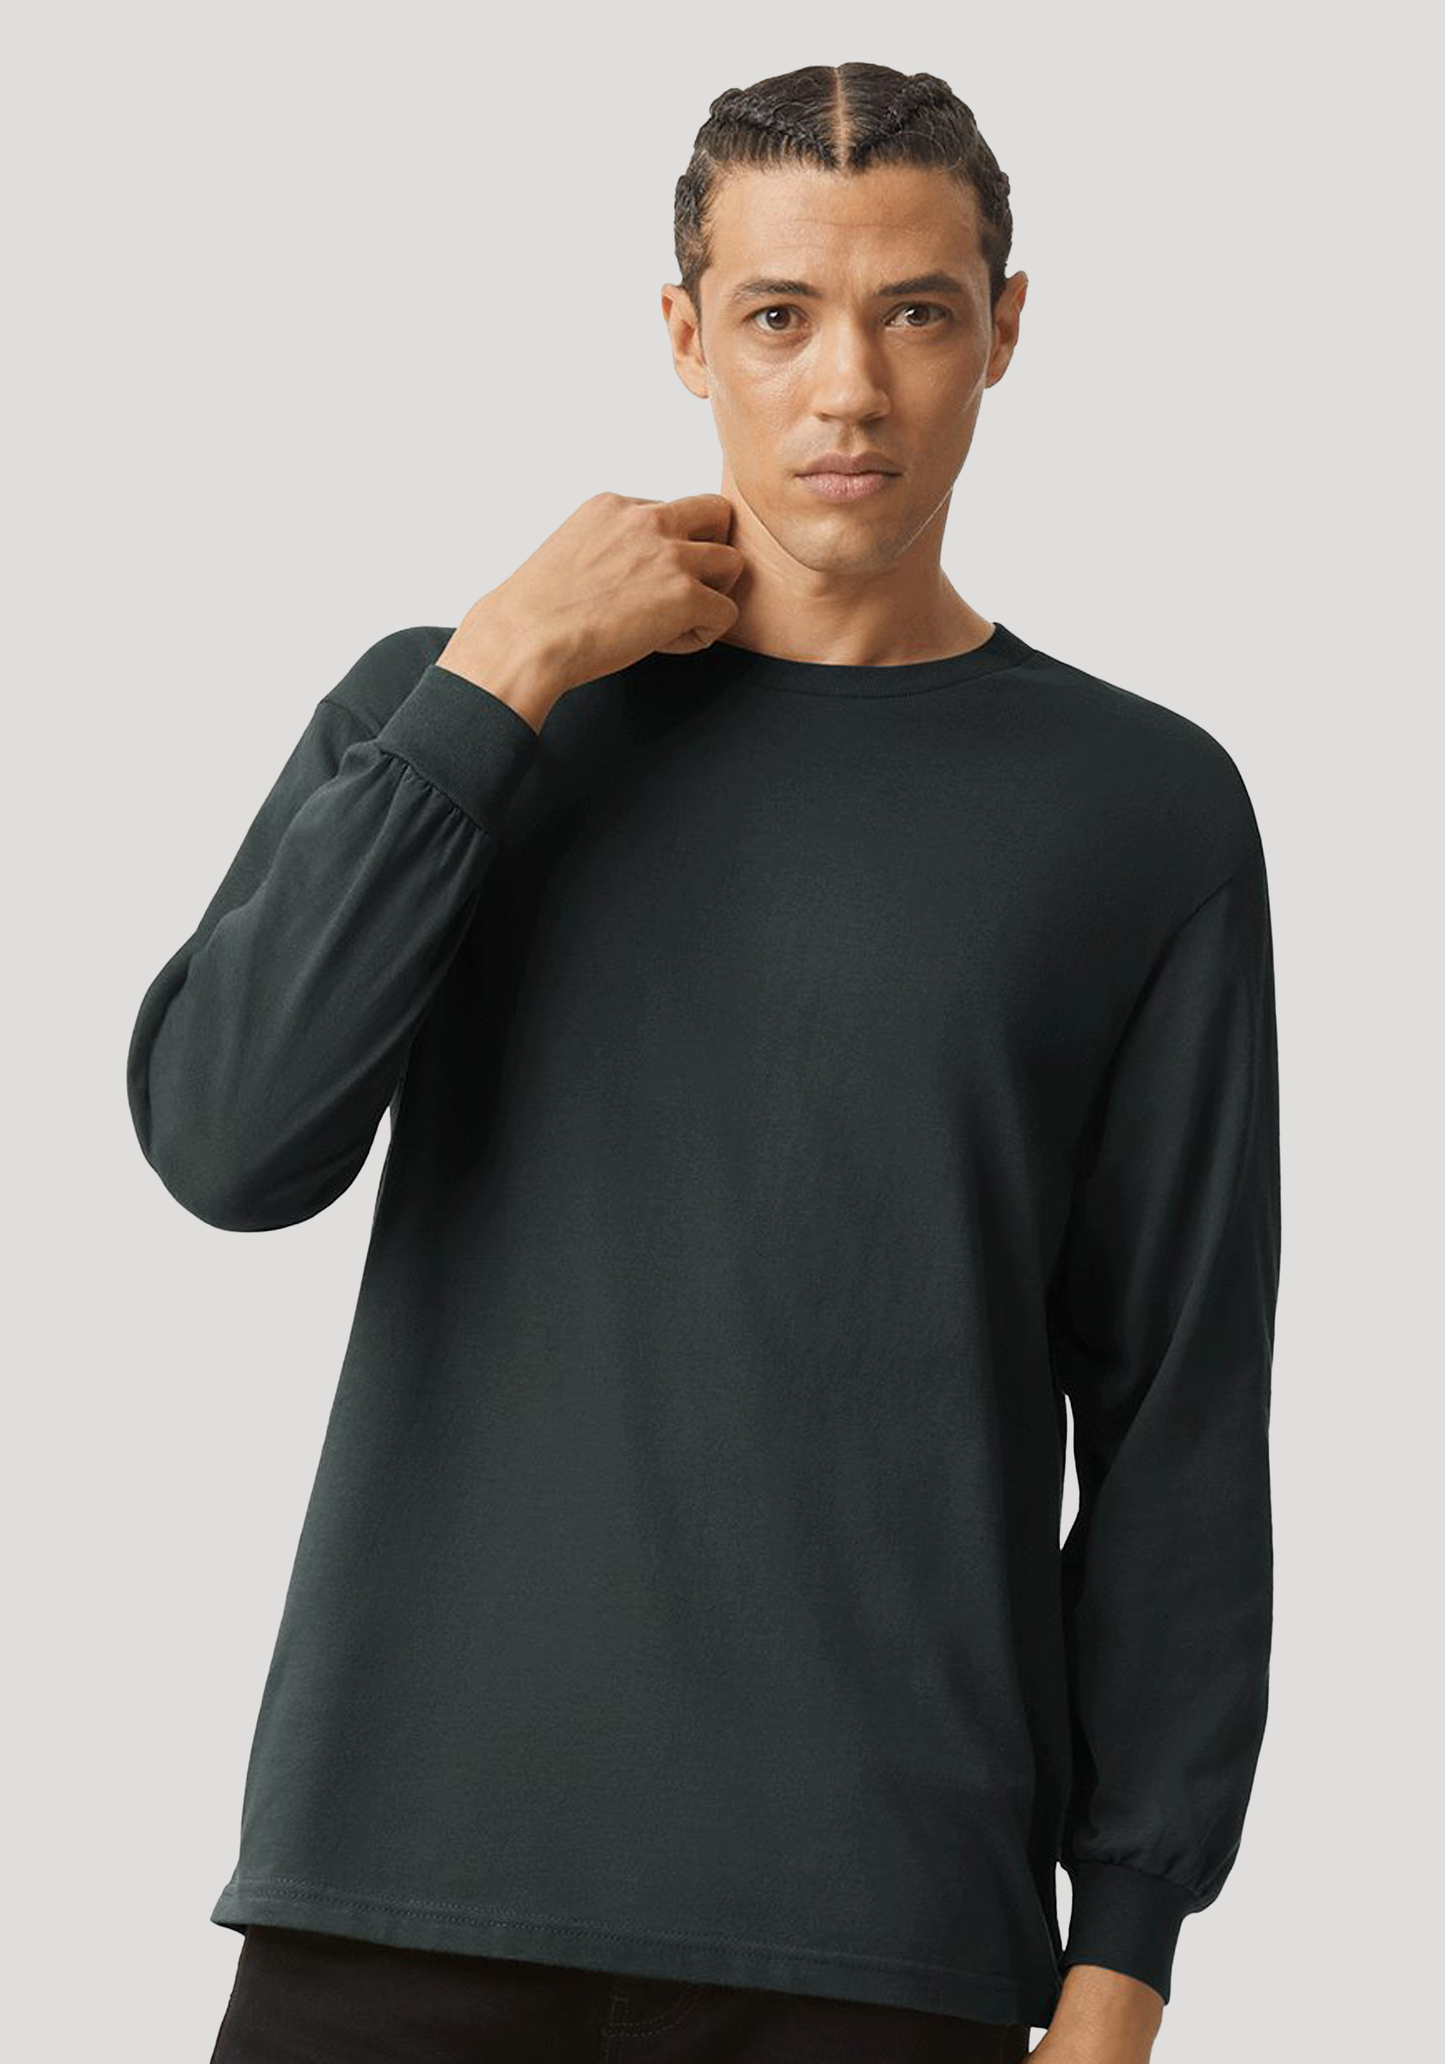 3A Alstyle Basics - 1304 Classic Long Sleeve T-Shirt